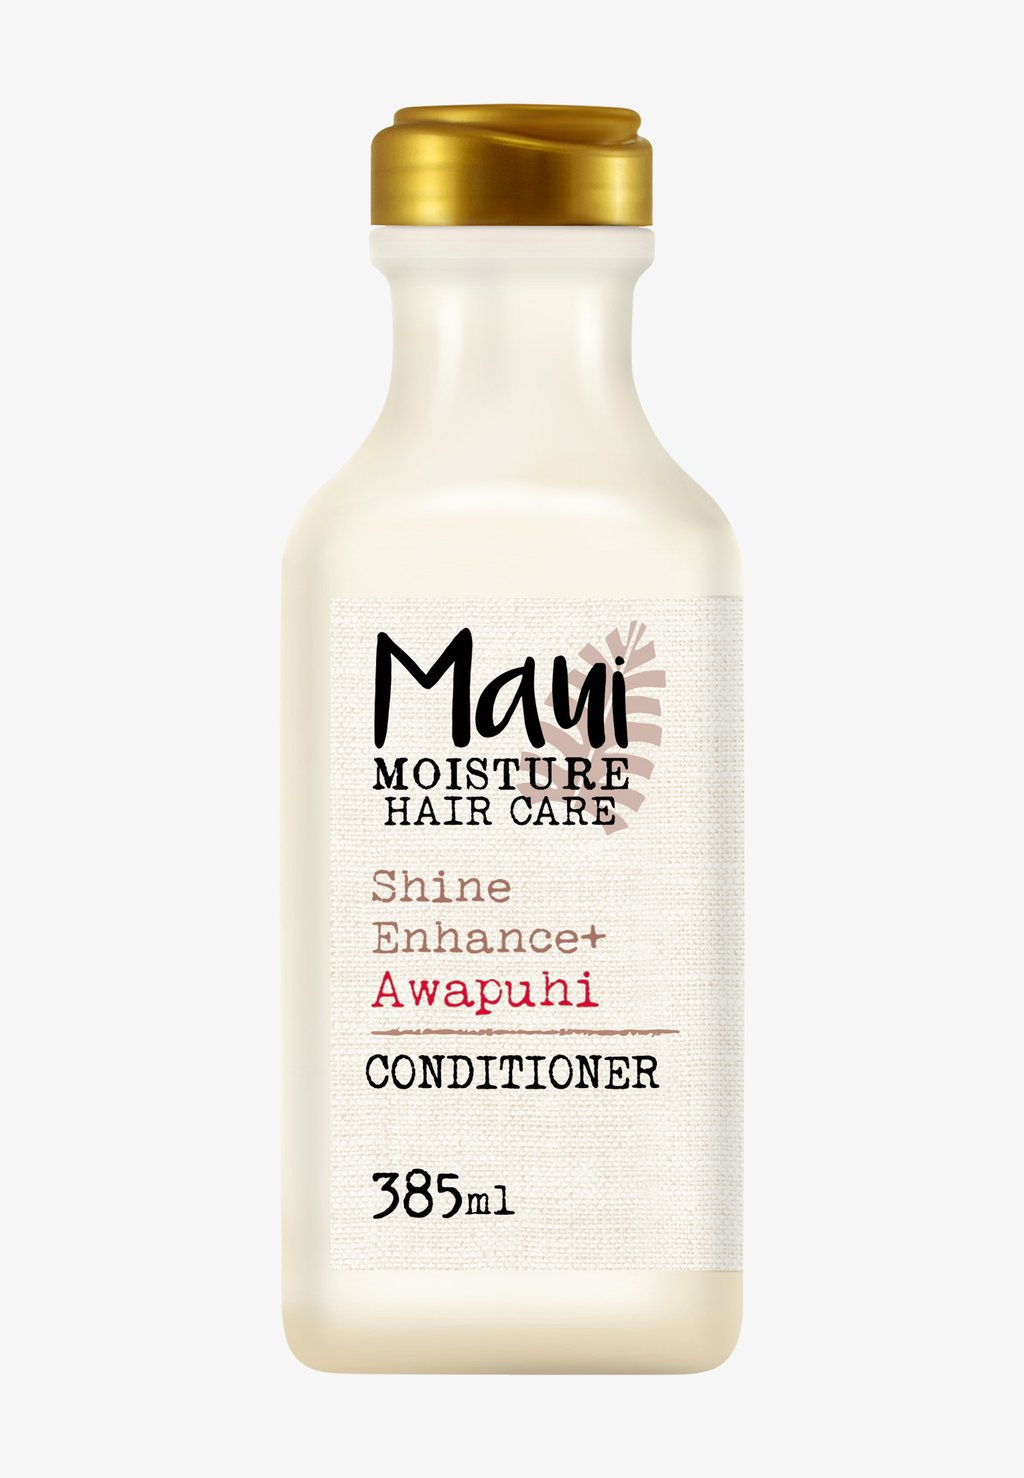 Кондиционер Shine Amplifying + Awapuhi Conditioner Maui Moisture кондиционер для волос 385 мл maui moisture shine enhance awapuhi conditioner